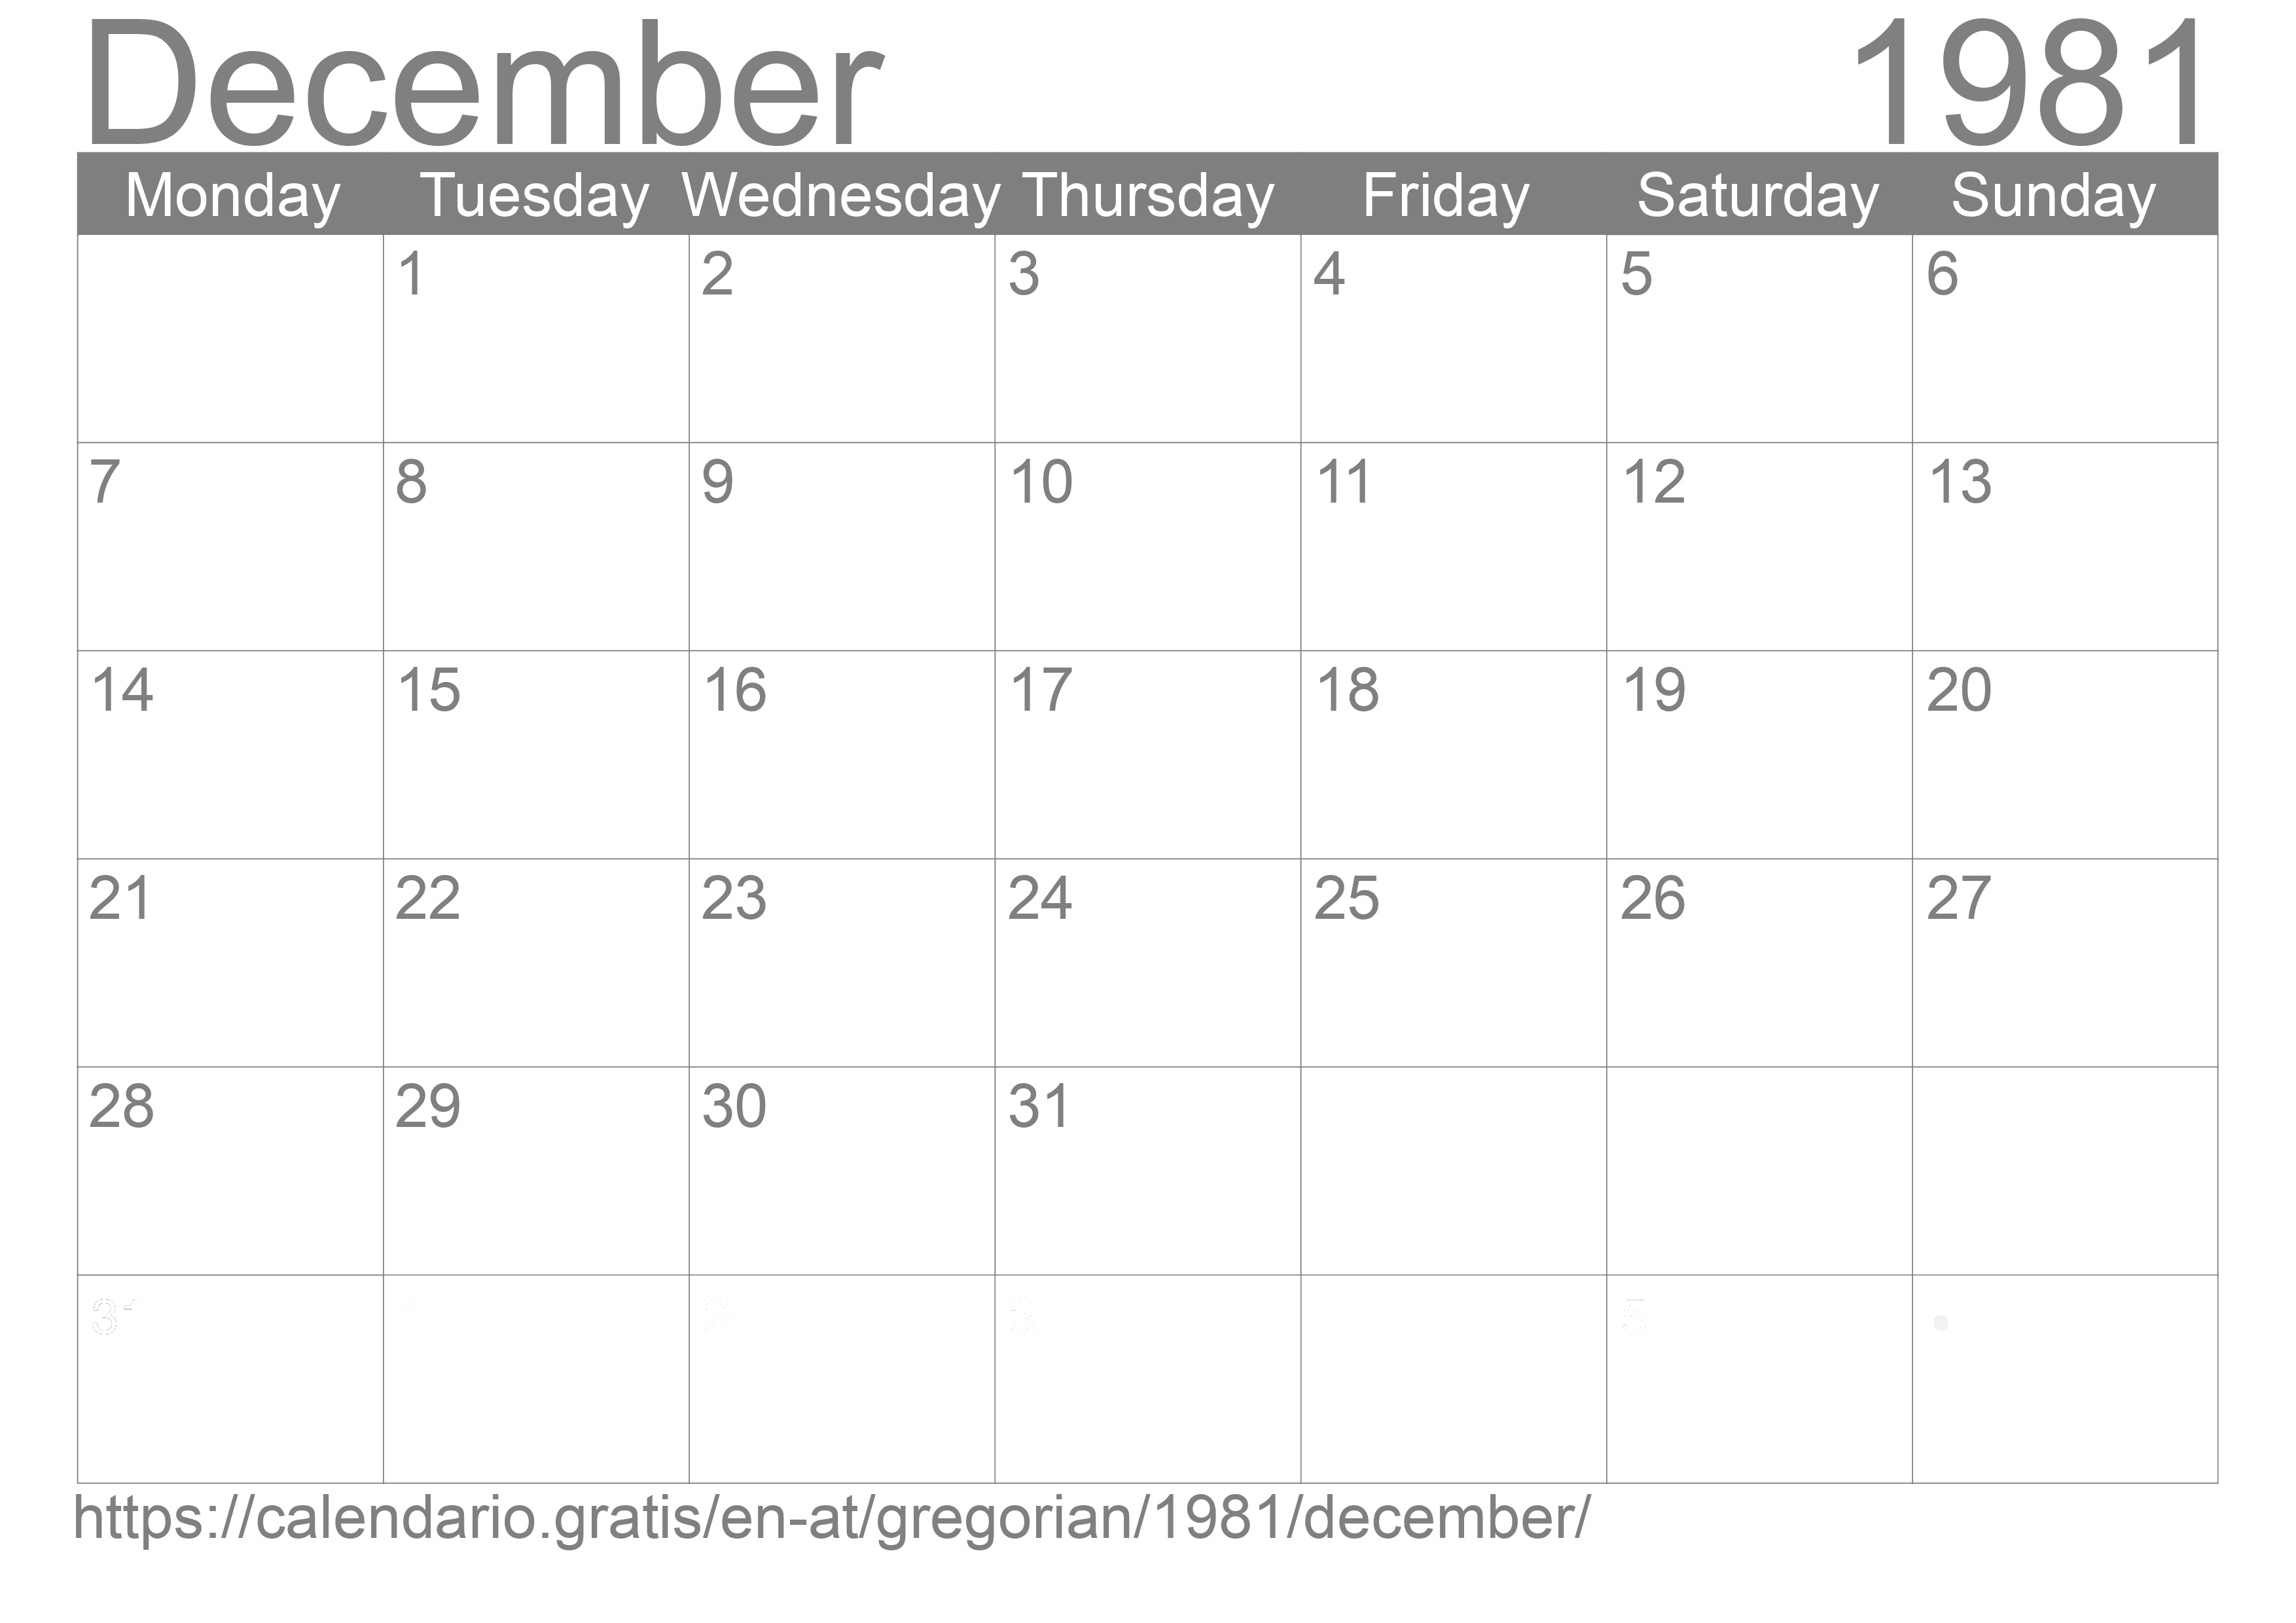 Calendar December 1981 to print